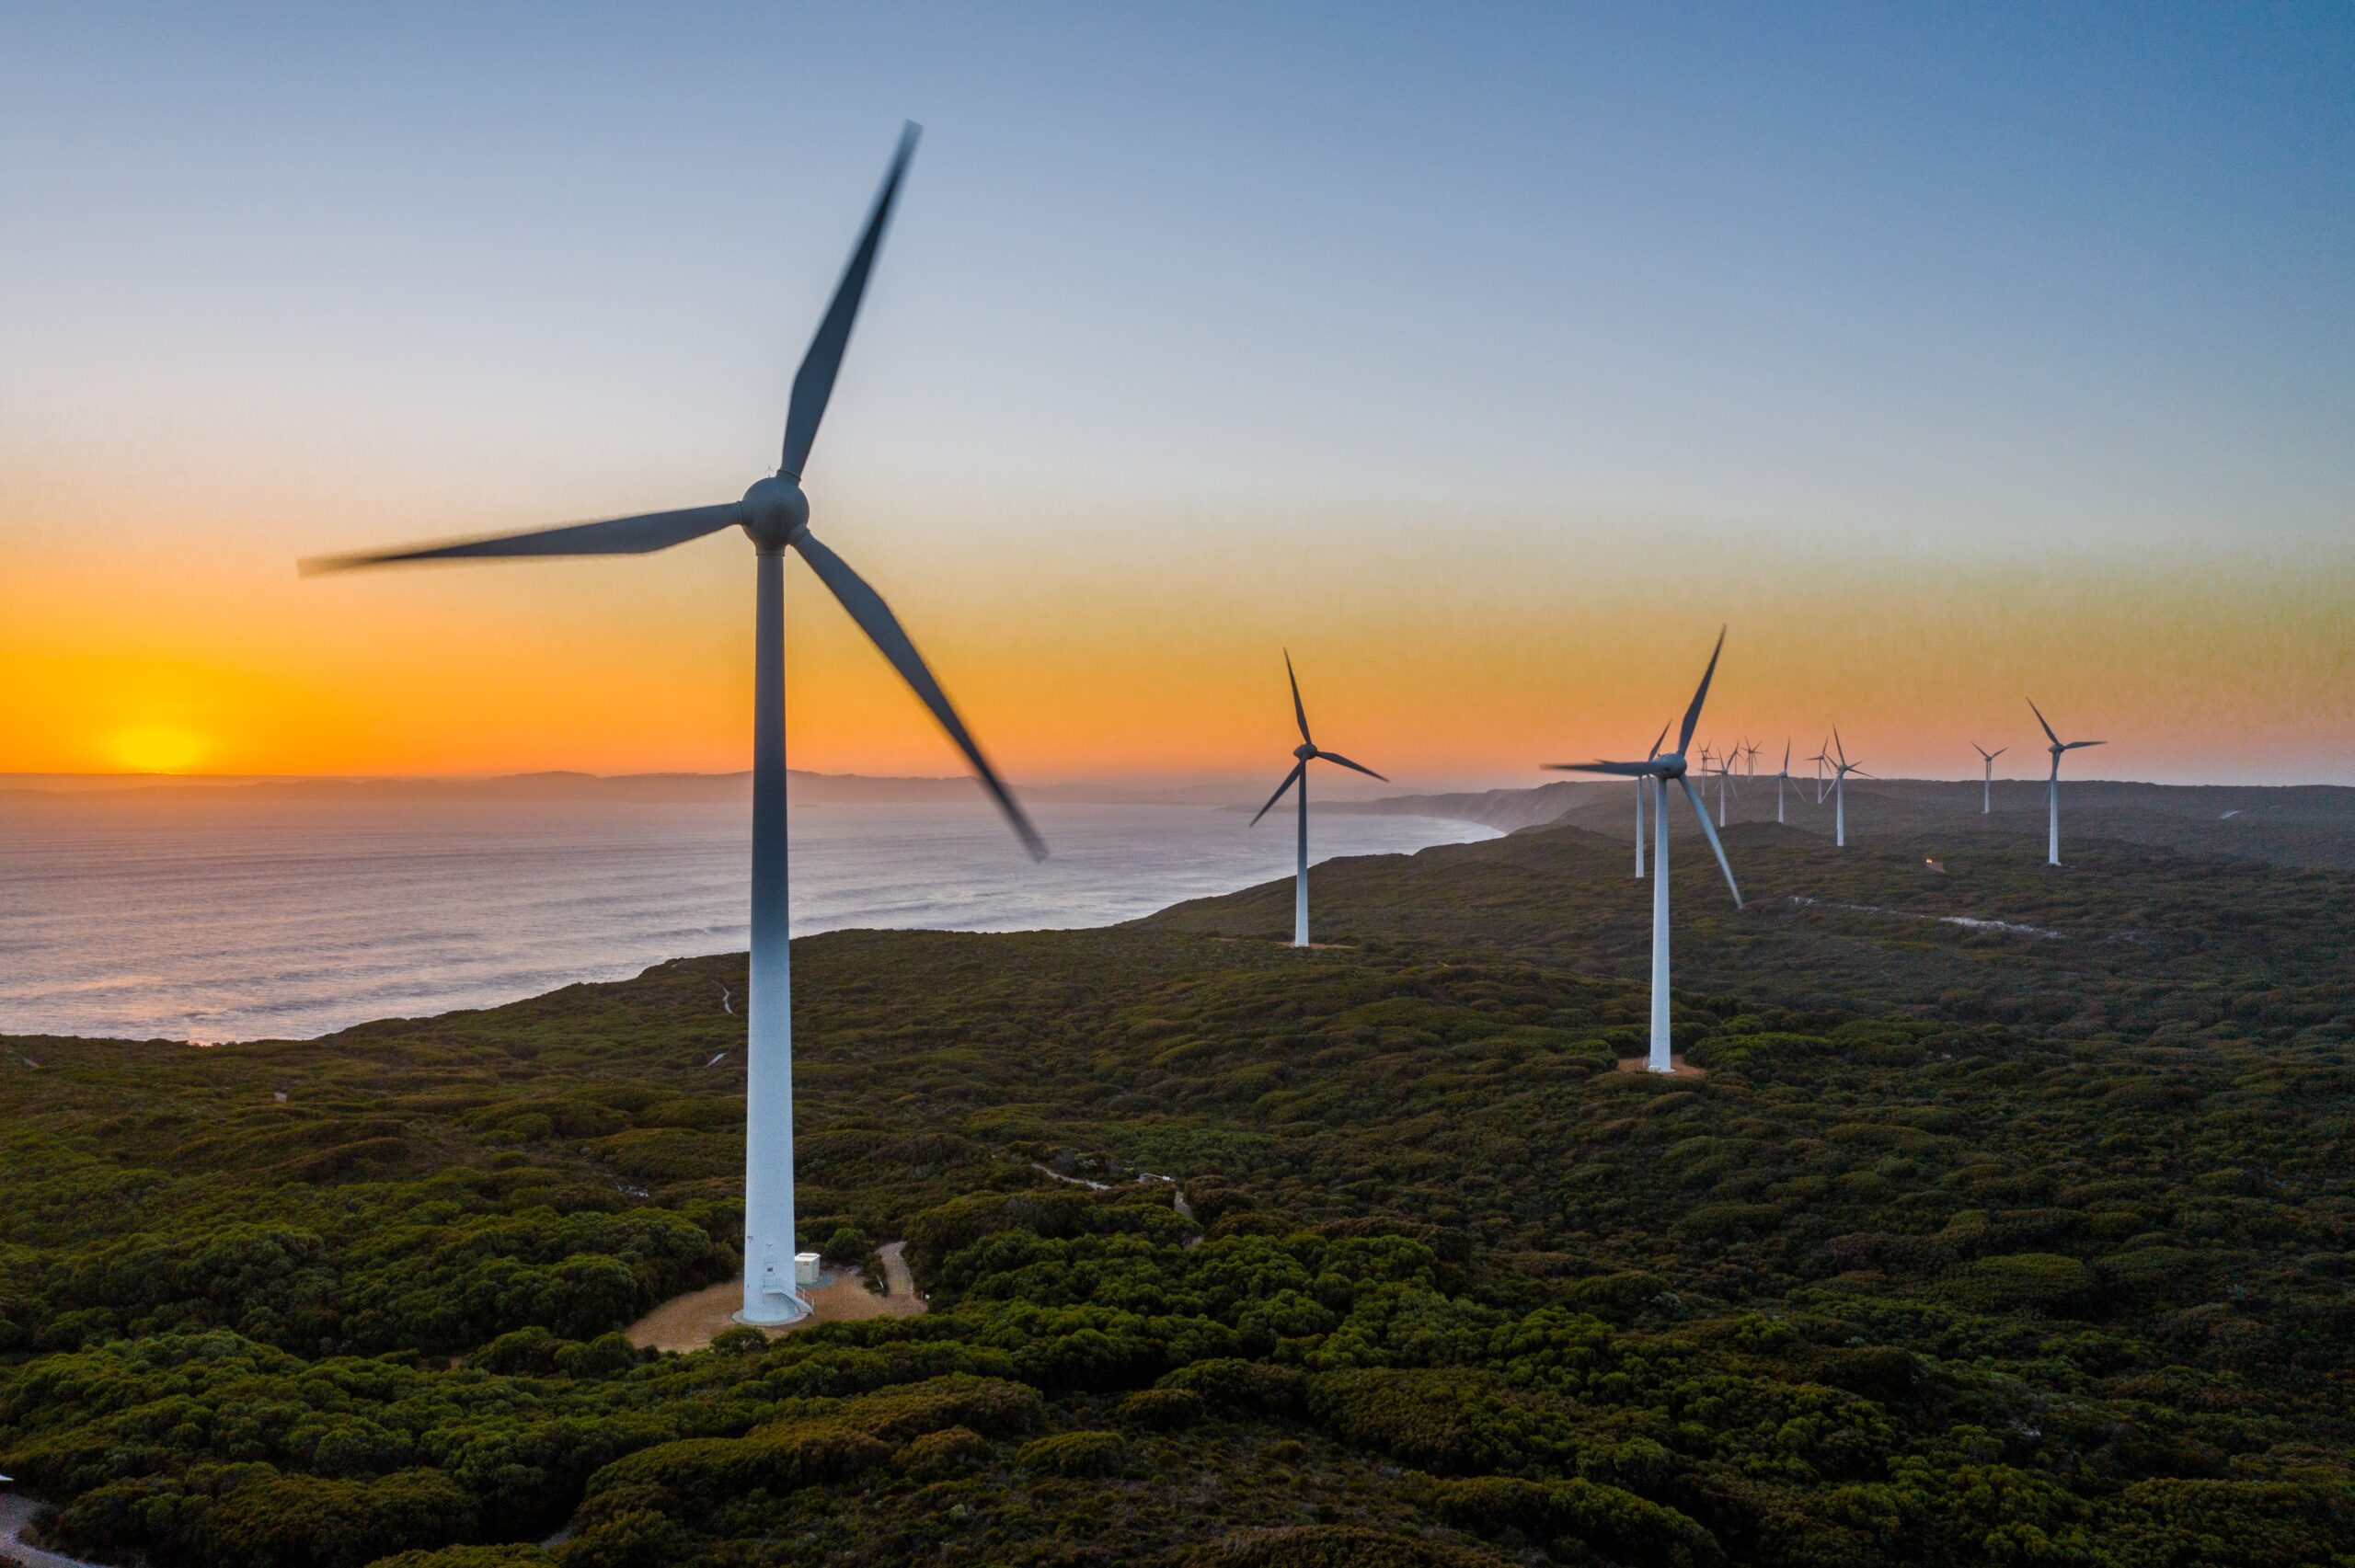 Wind turbines at sunset overlooking a coastal landscape